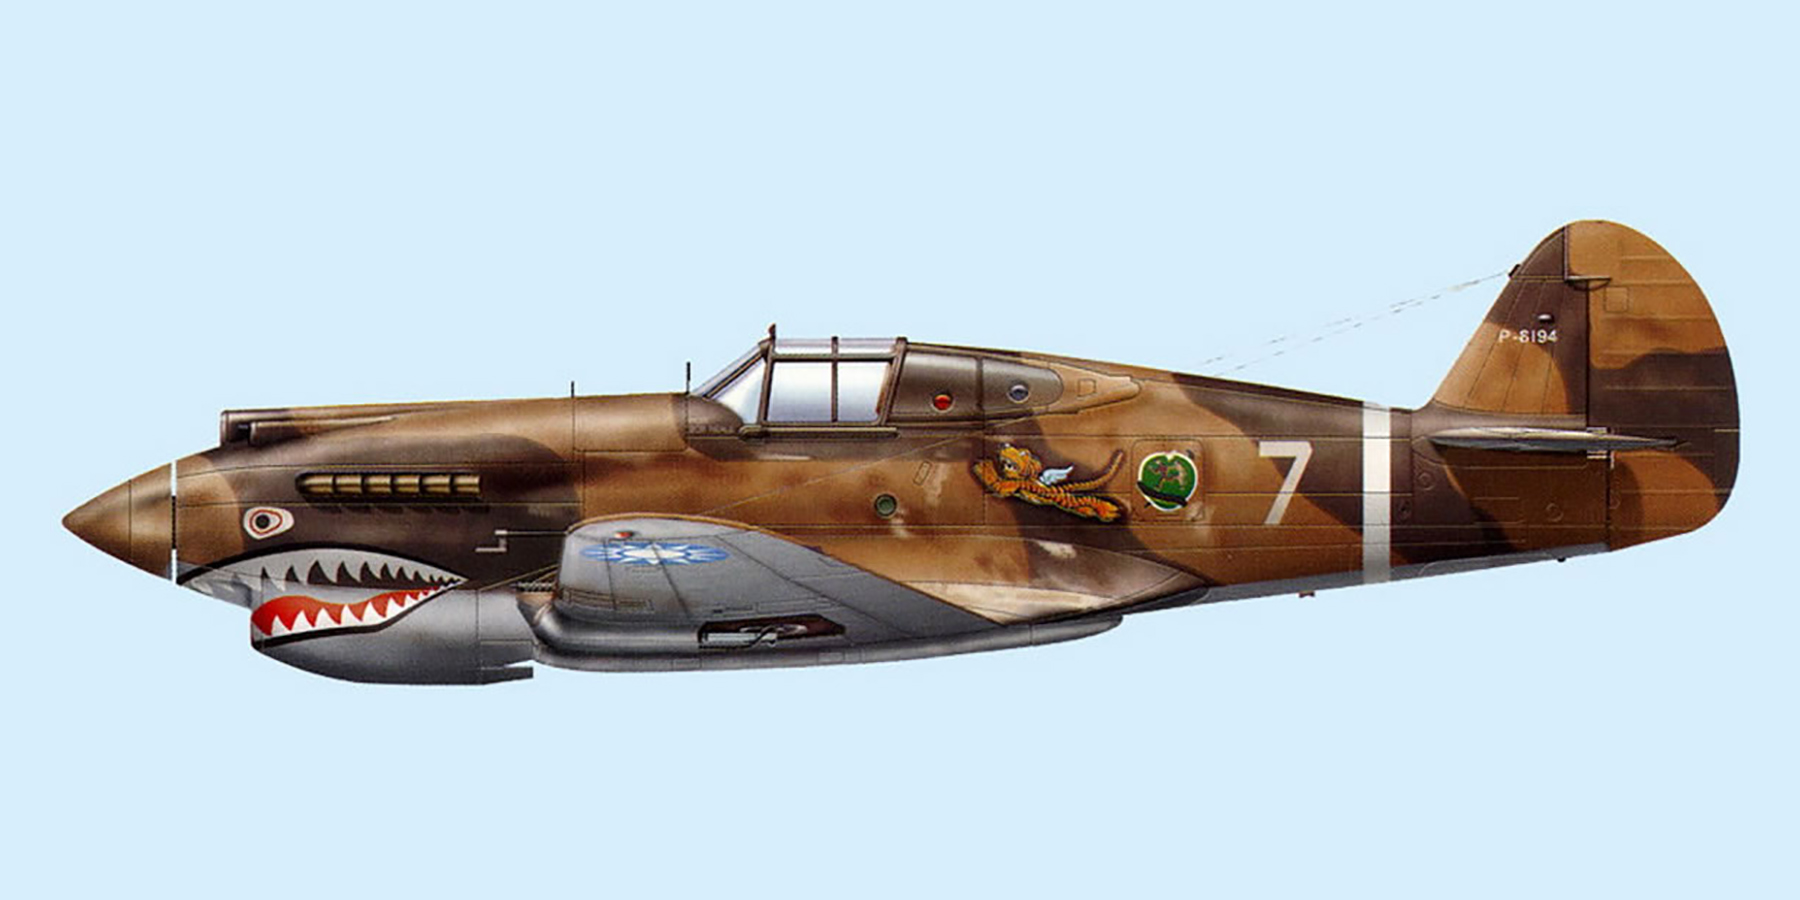 Curtiss Hawk 81A 23FG1PS White 7 P 8194 Robert Neale China 1942 0B